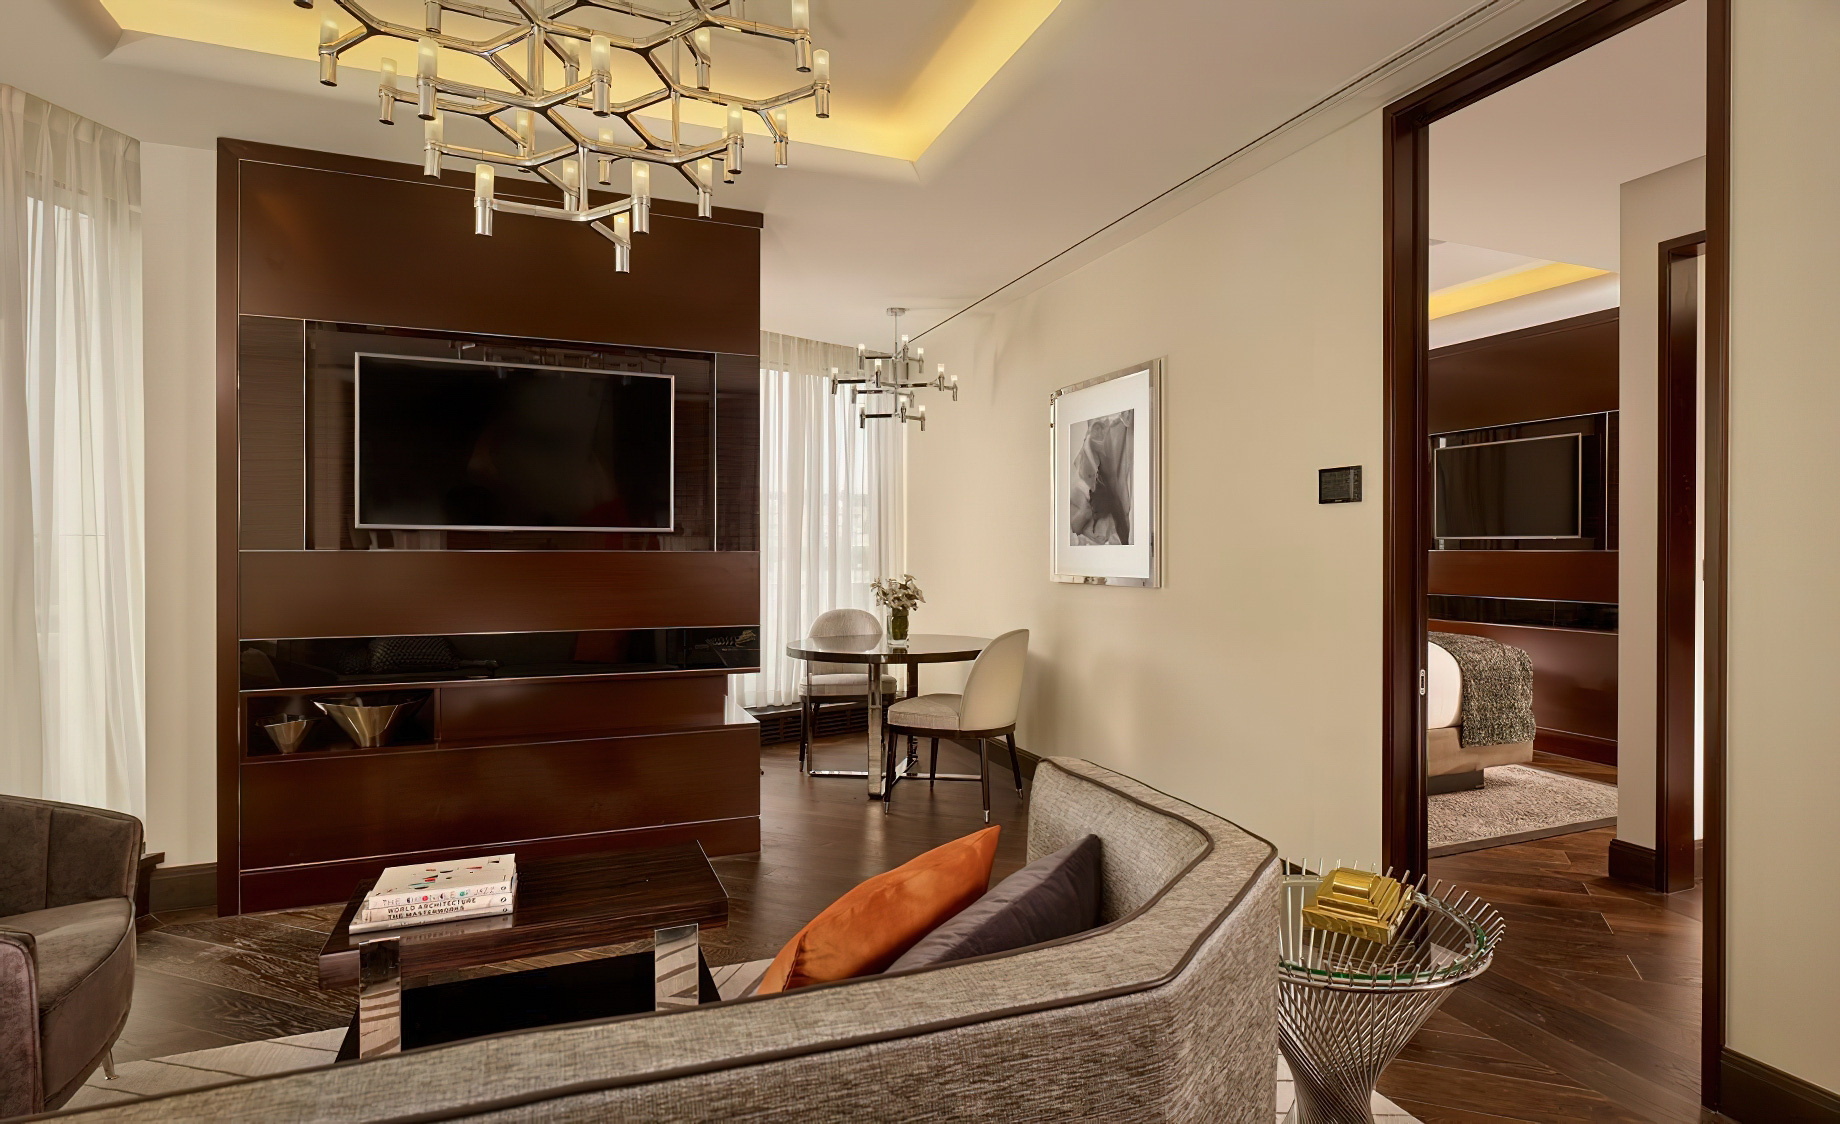 The Ritz-Carlton, Astana Hotel - Nur-Sultan, Kazakhstan - Junior Suite Interior